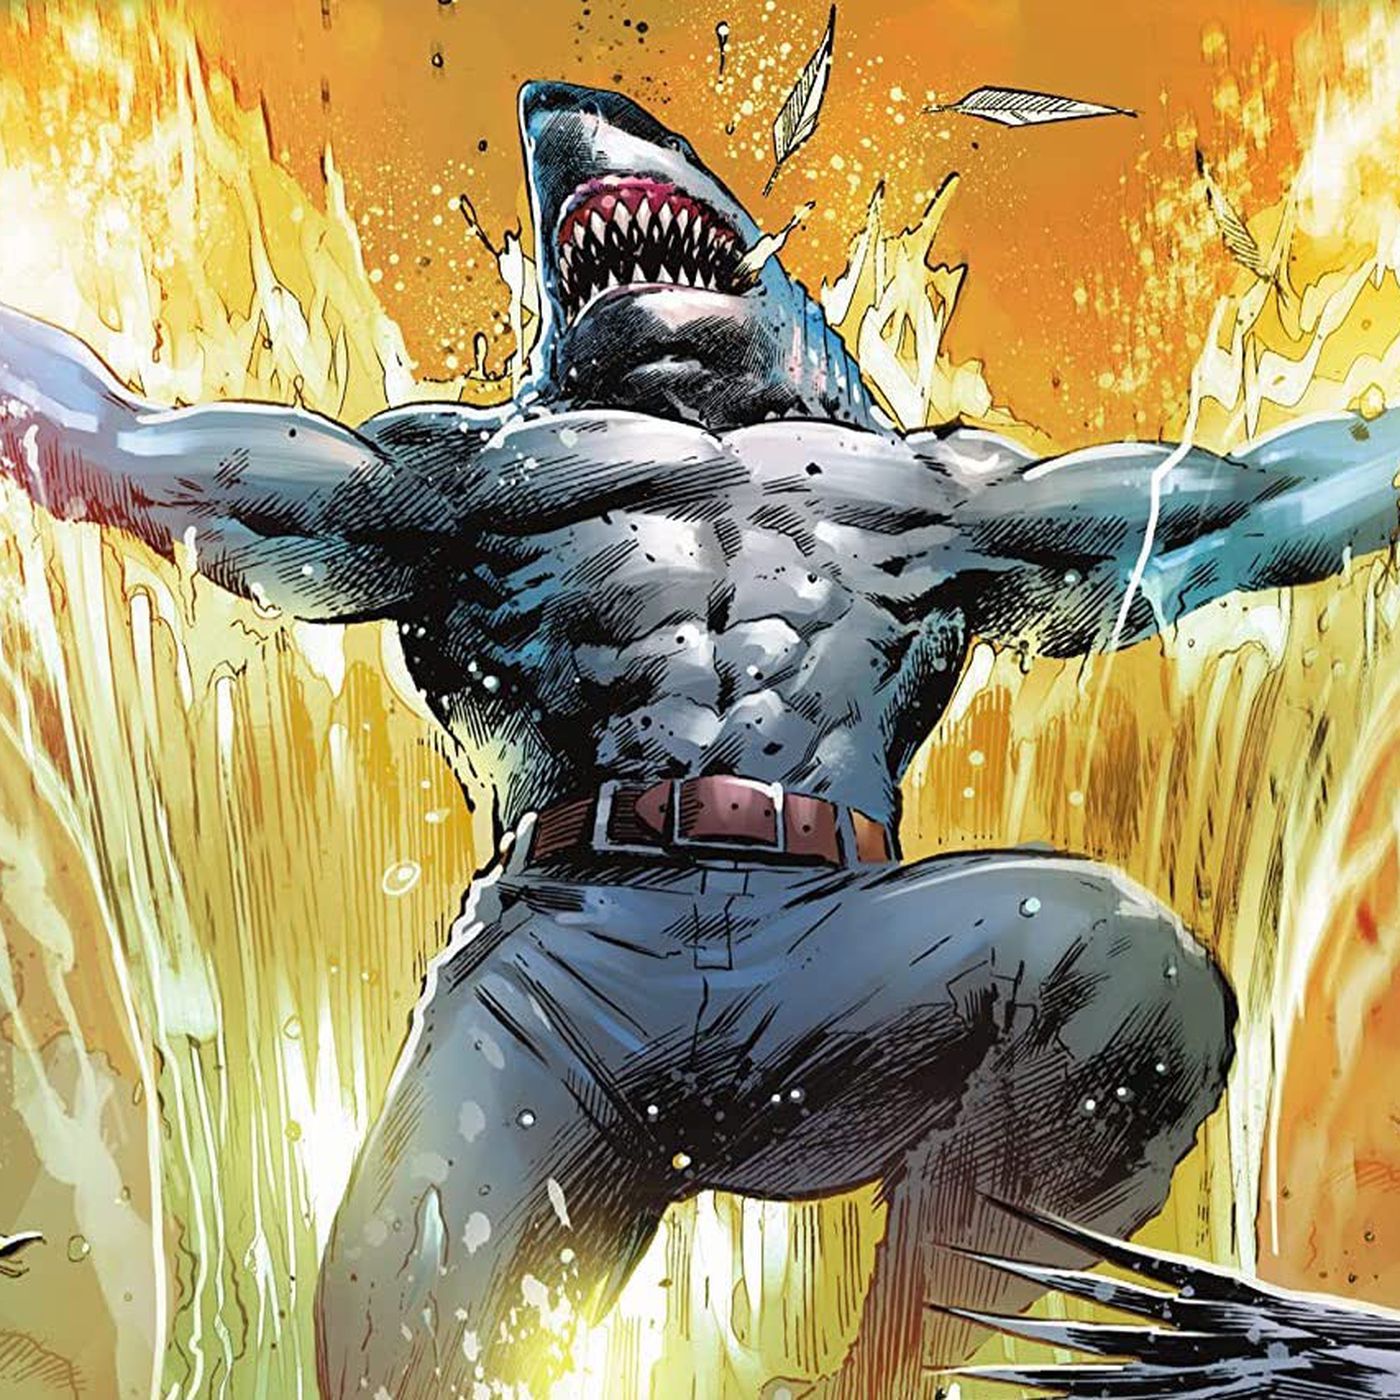 DC's new Suicide Squad origin comic turns King Shark into Jesus Shark